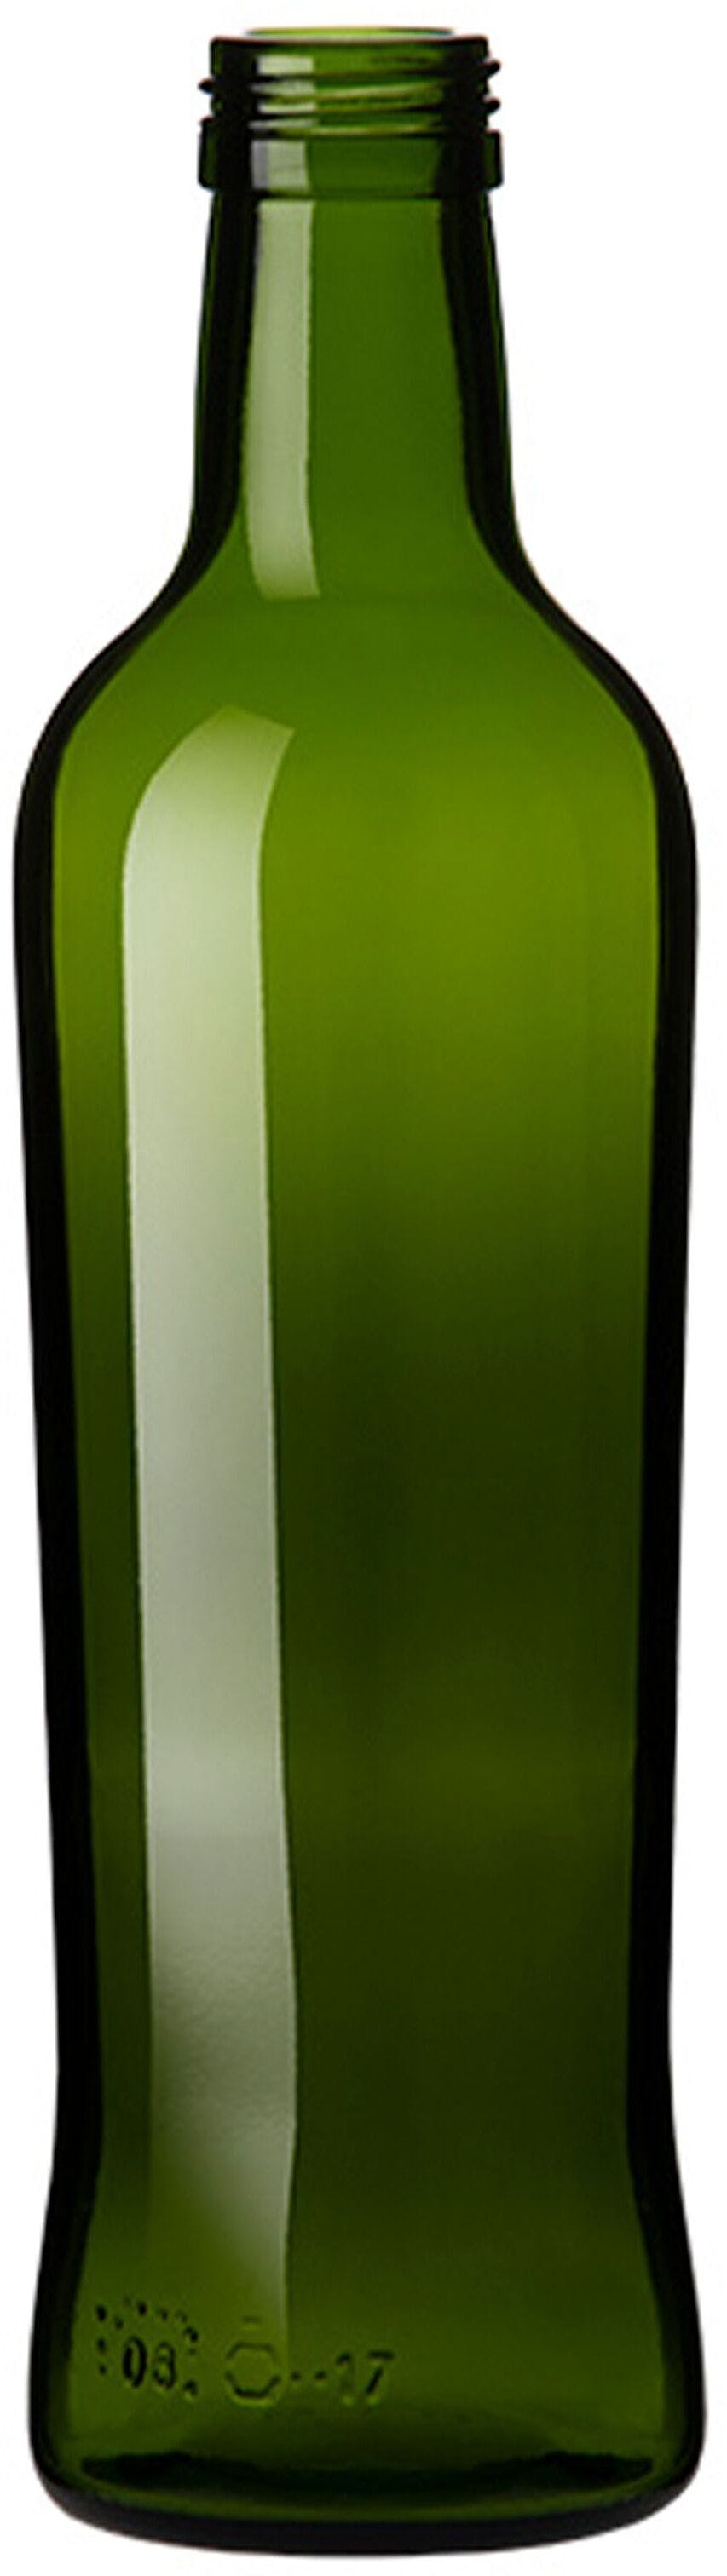 Bottle OLIO  500 ml BG-Screw